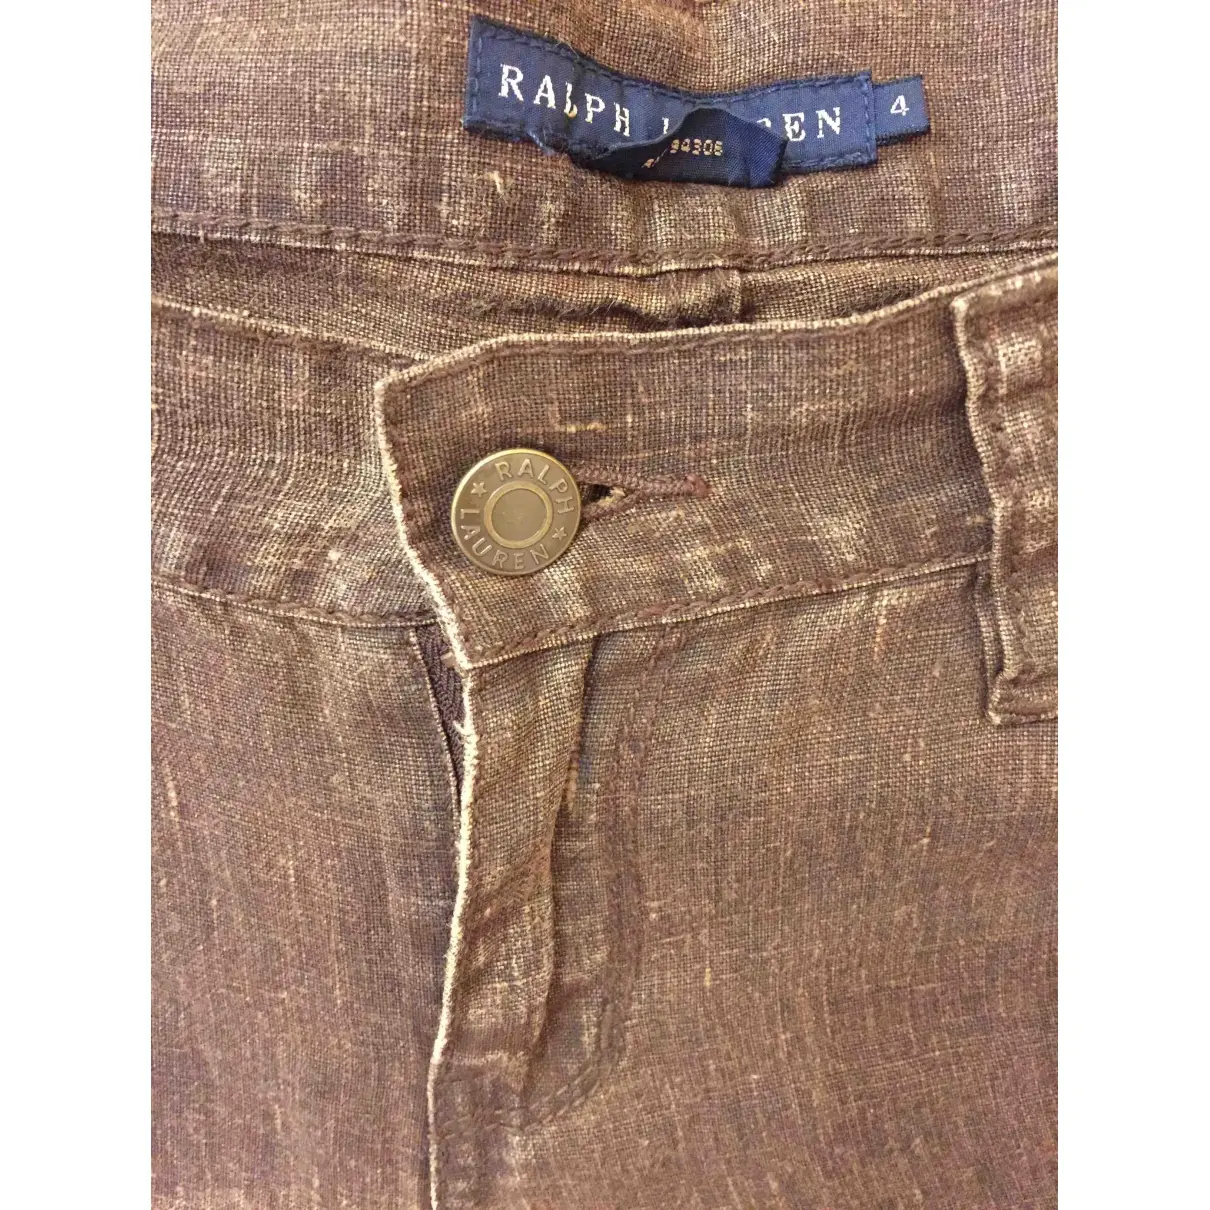 Ralph Lauren Collection Linen trousers for sale